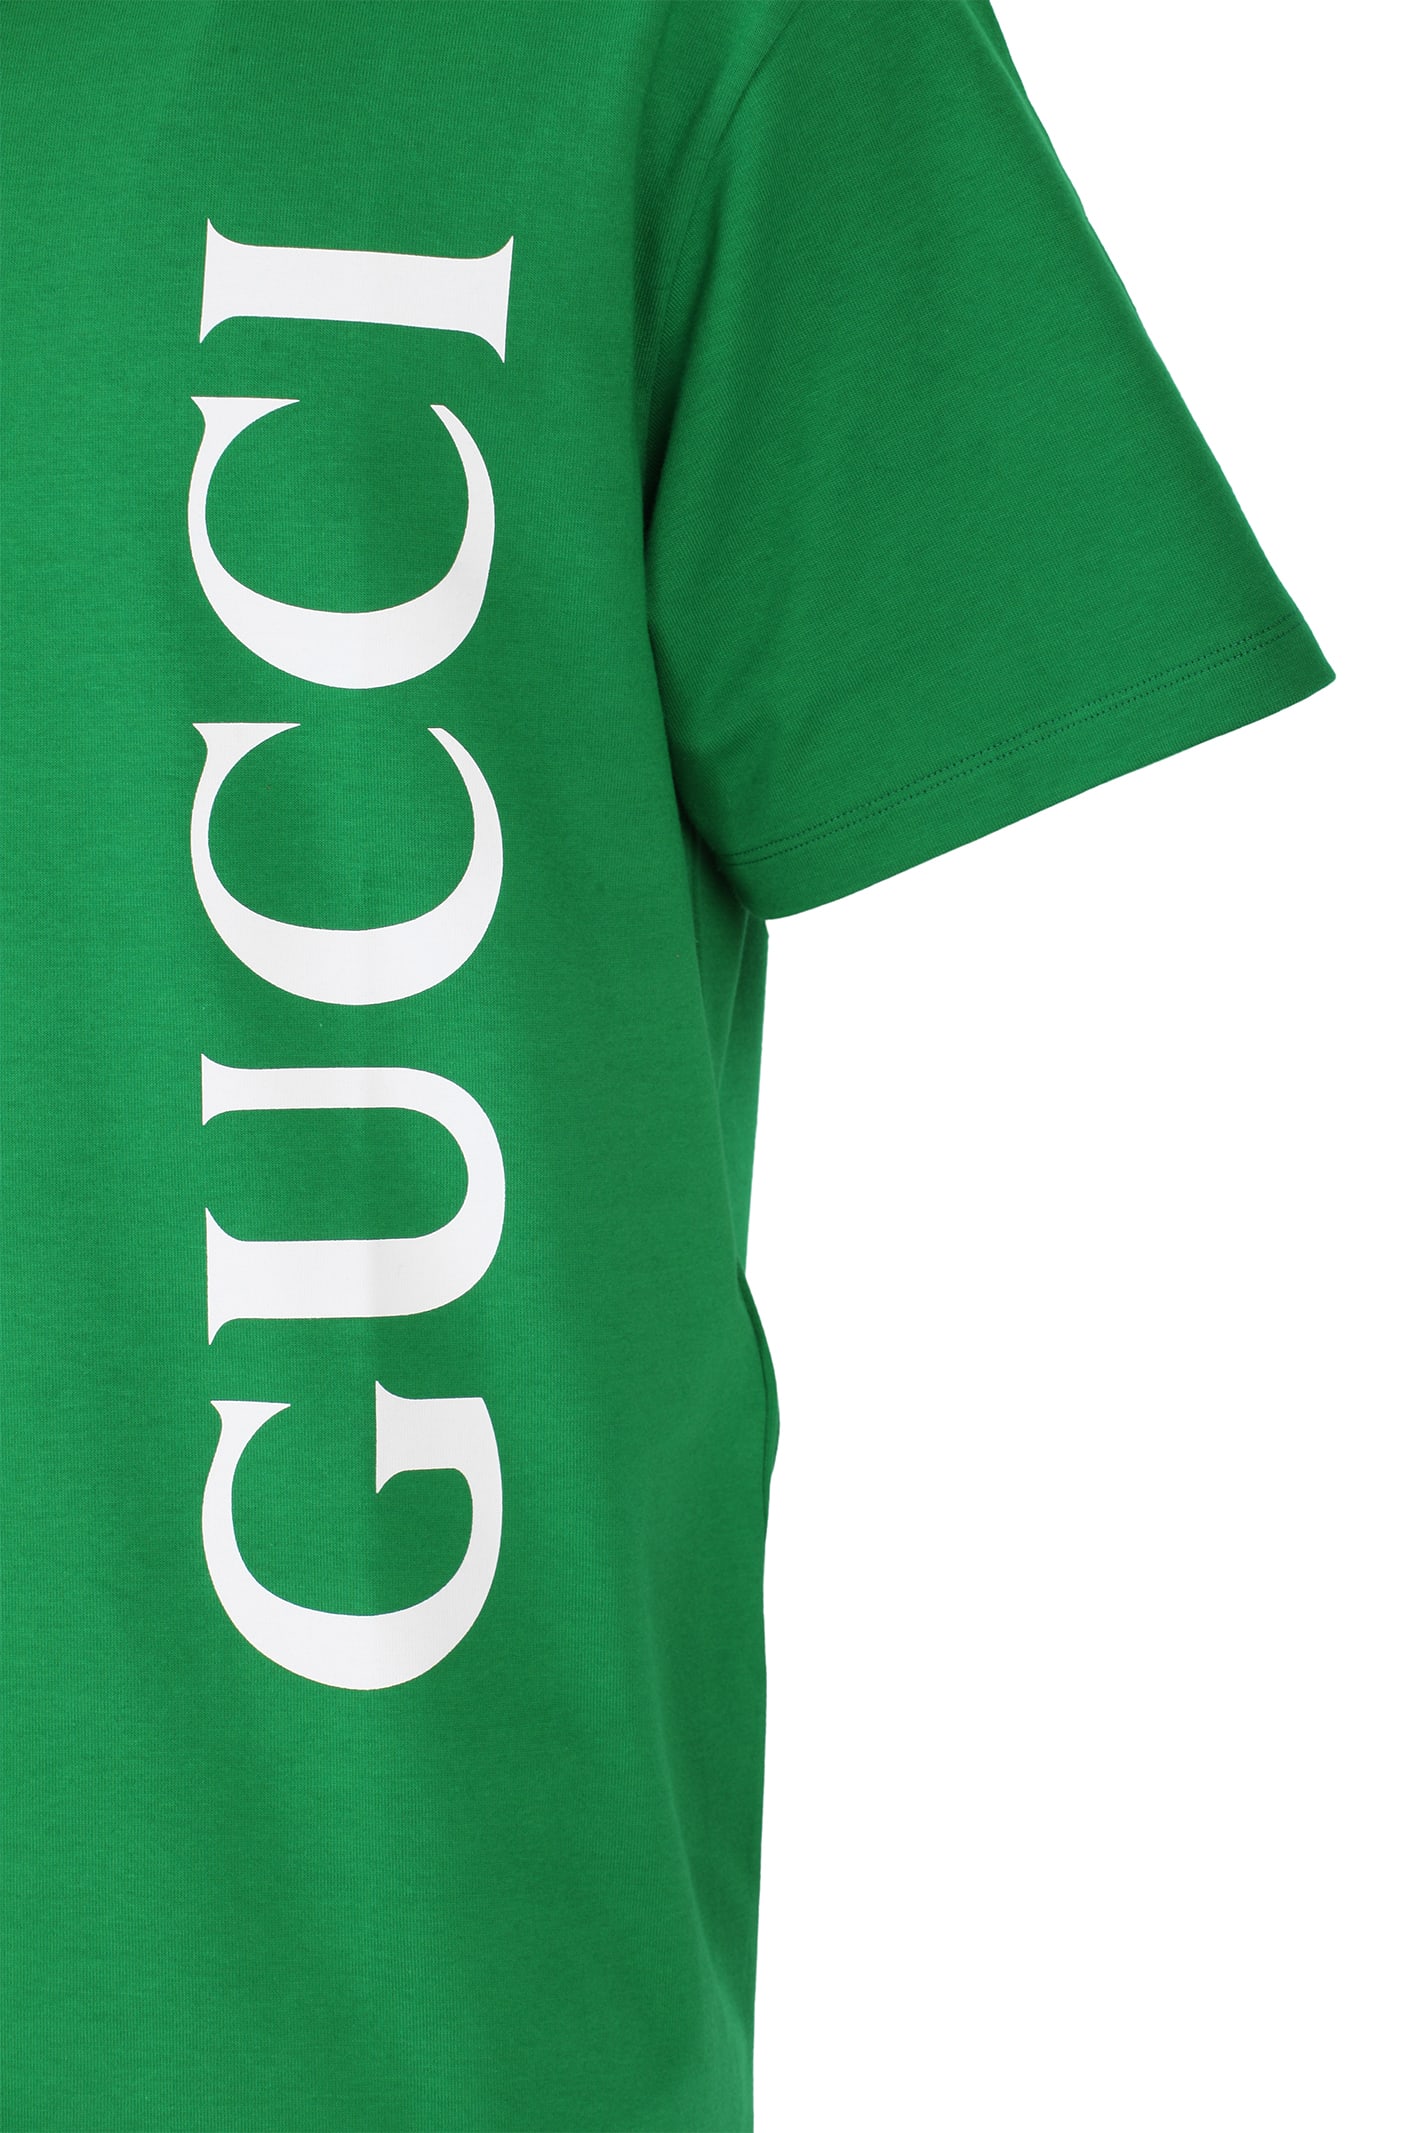 gucci green shirt